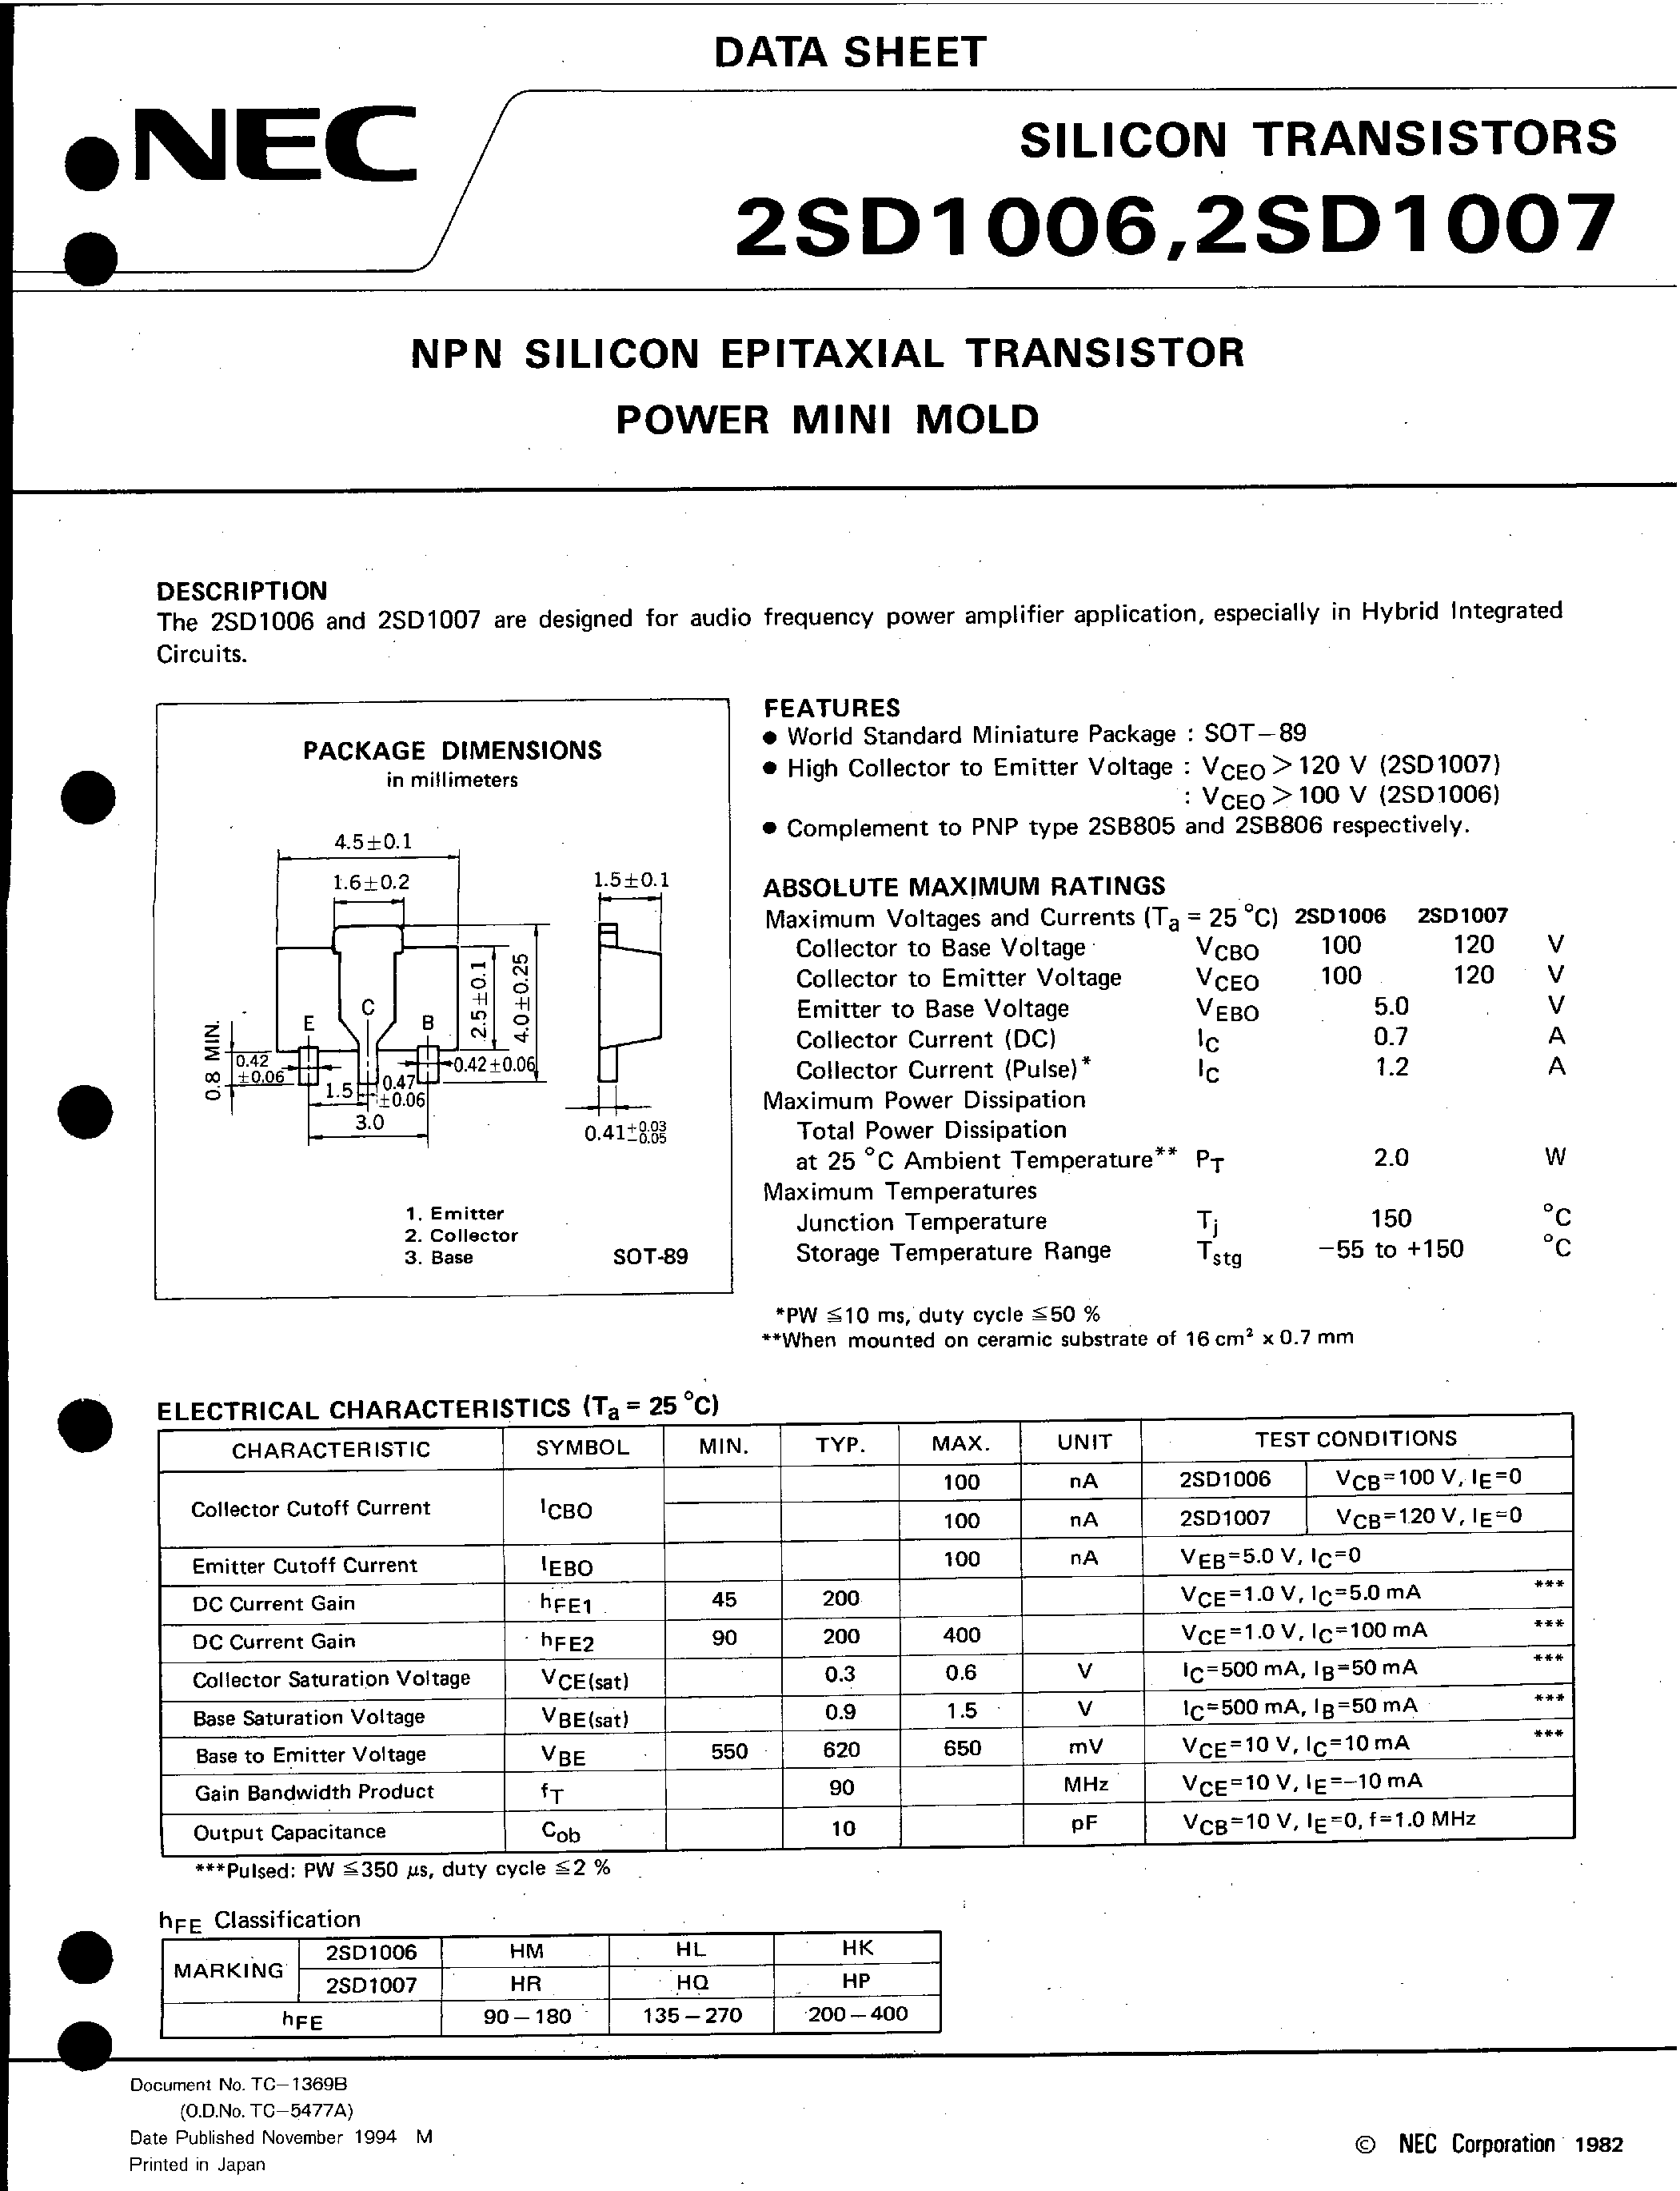 Datasheet 2SD1006 - NPN SILICON EPITAXIAL TRANSISTOR POWER MINI MOLD page 1